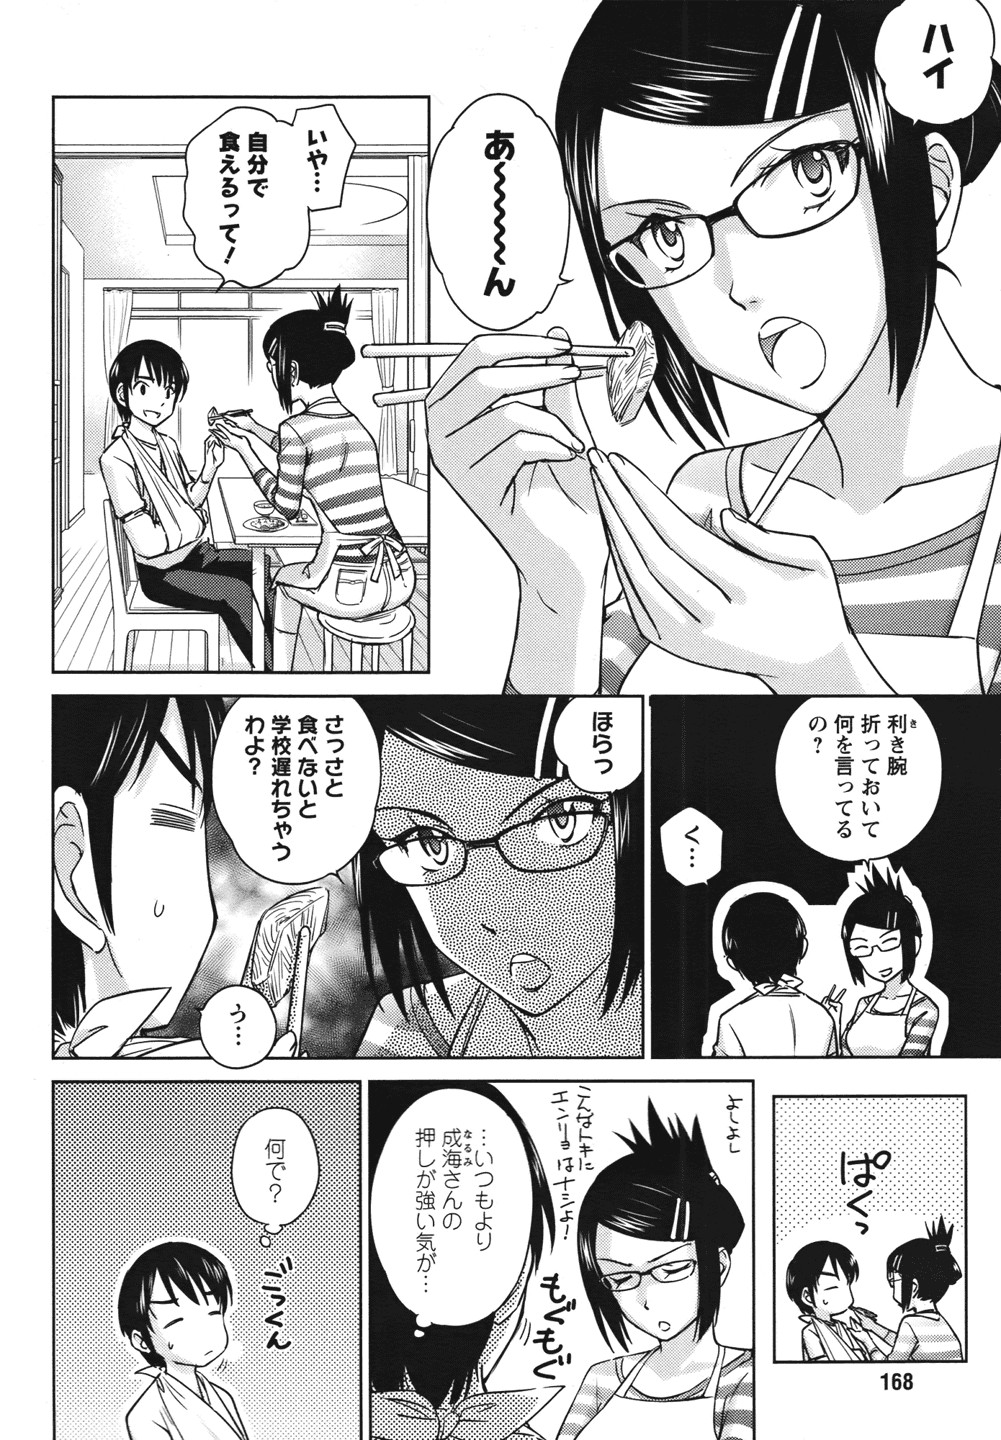 Kono Oneesan wa Fiction desu!? - Chapter 30 - Page 2